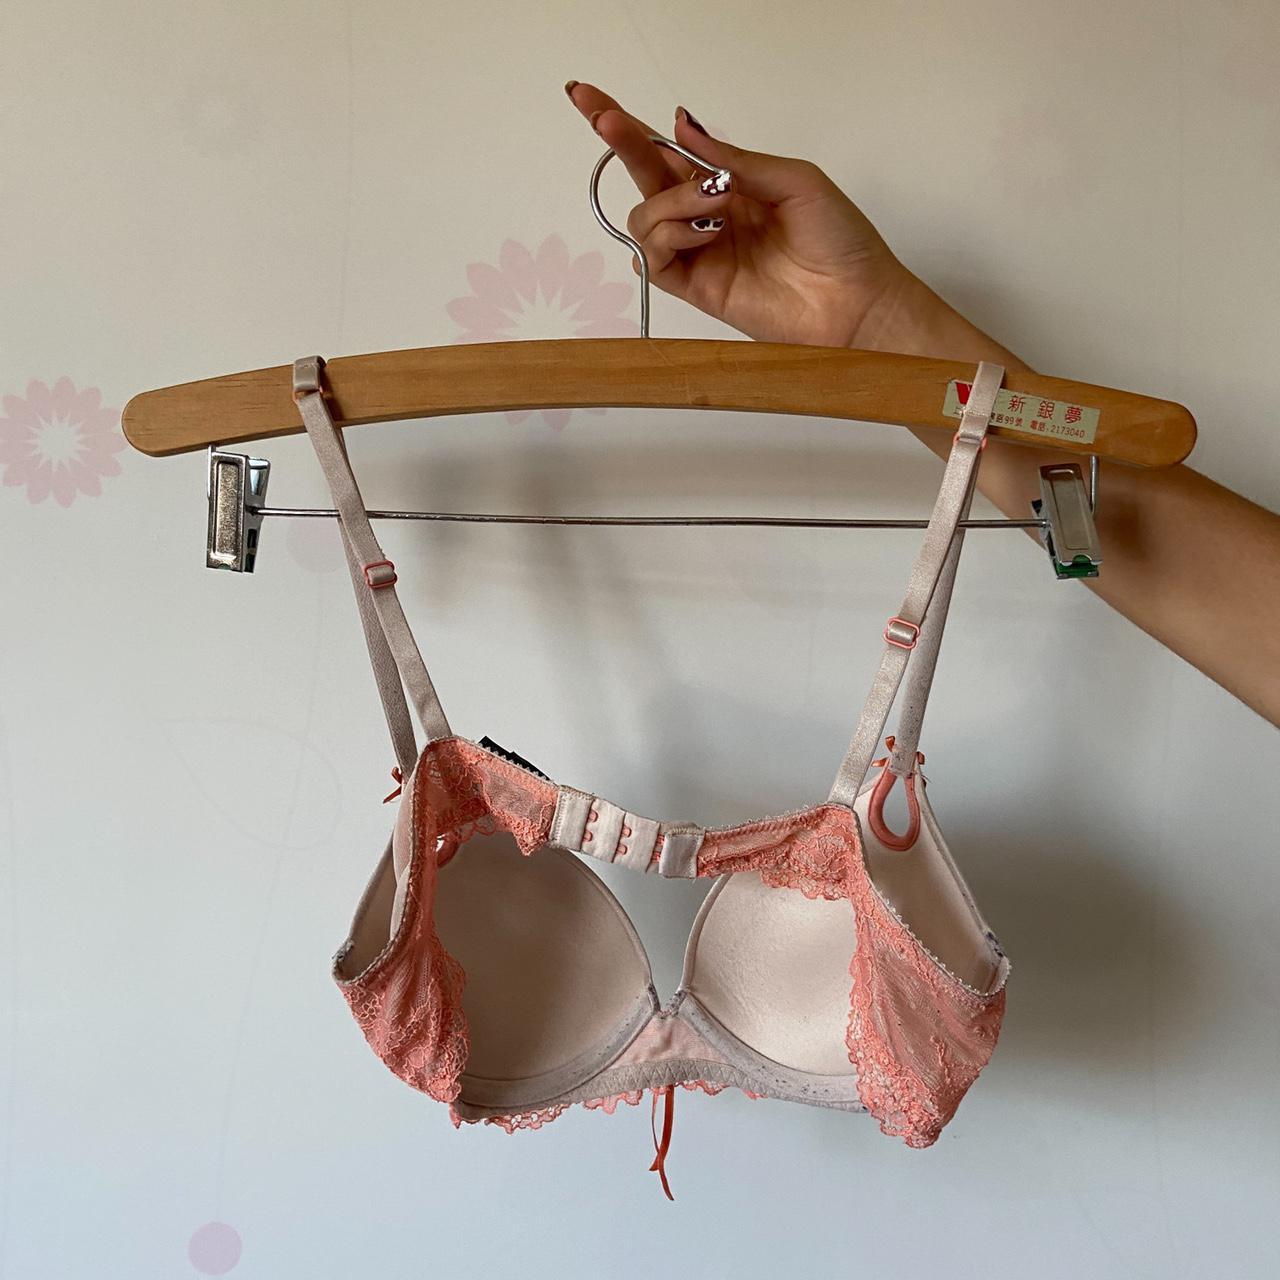 Product Image 3 - Heidi Klum bra 🌸

This bra